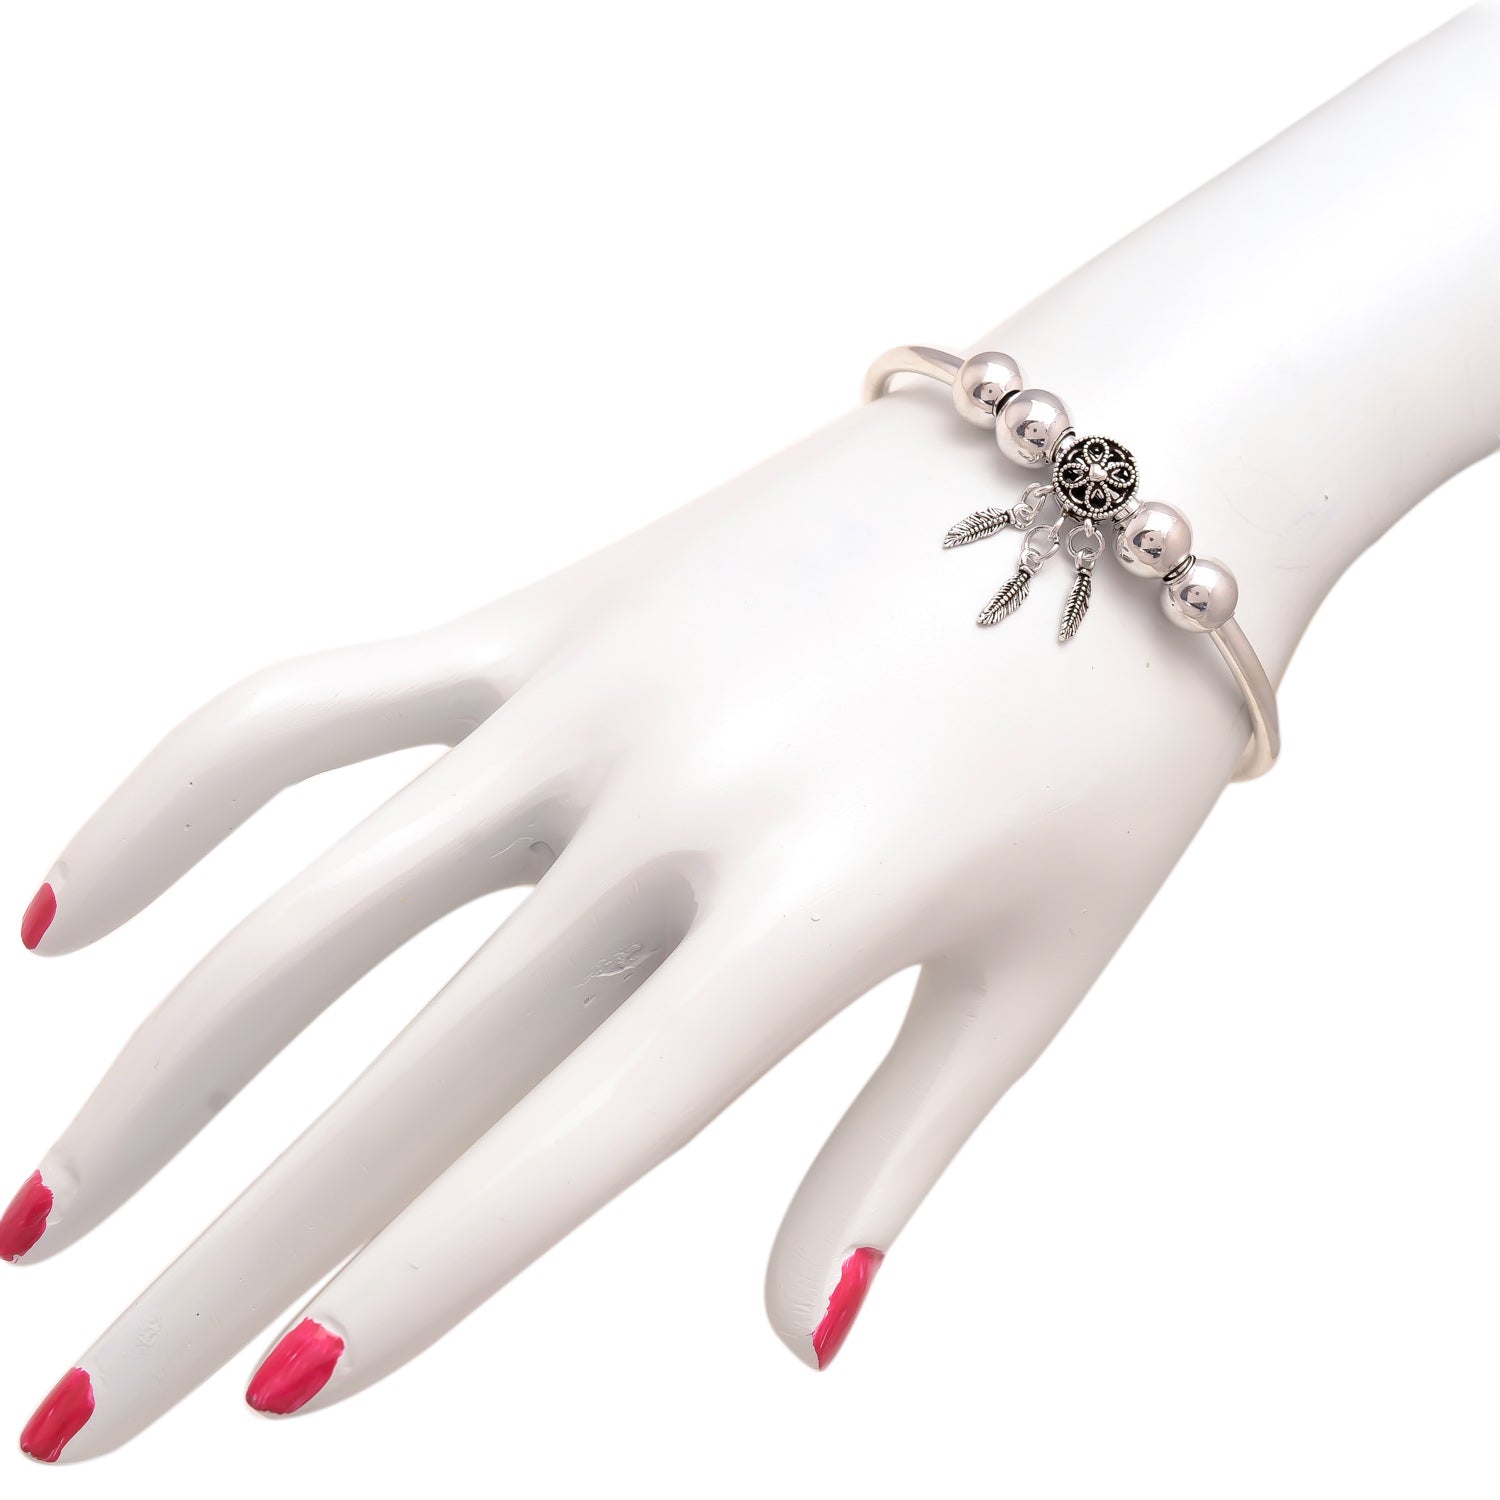 Silver Bracelet online for men | Silverlinings | Handmade Filigree